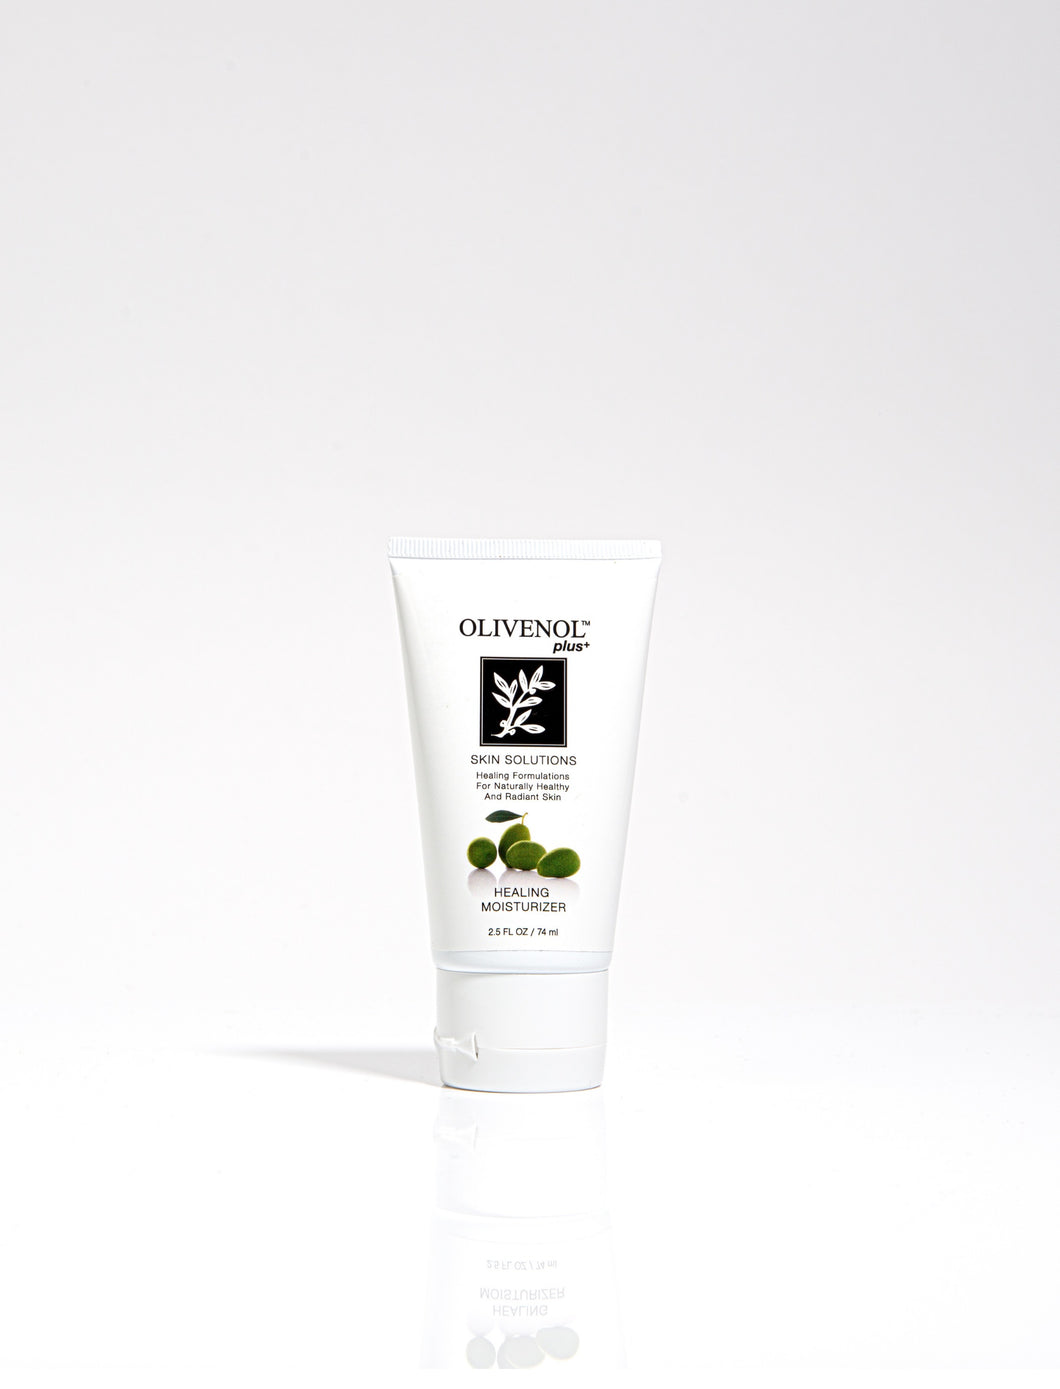 Olivenol plus+™ Skin Solutions: Moisturizer